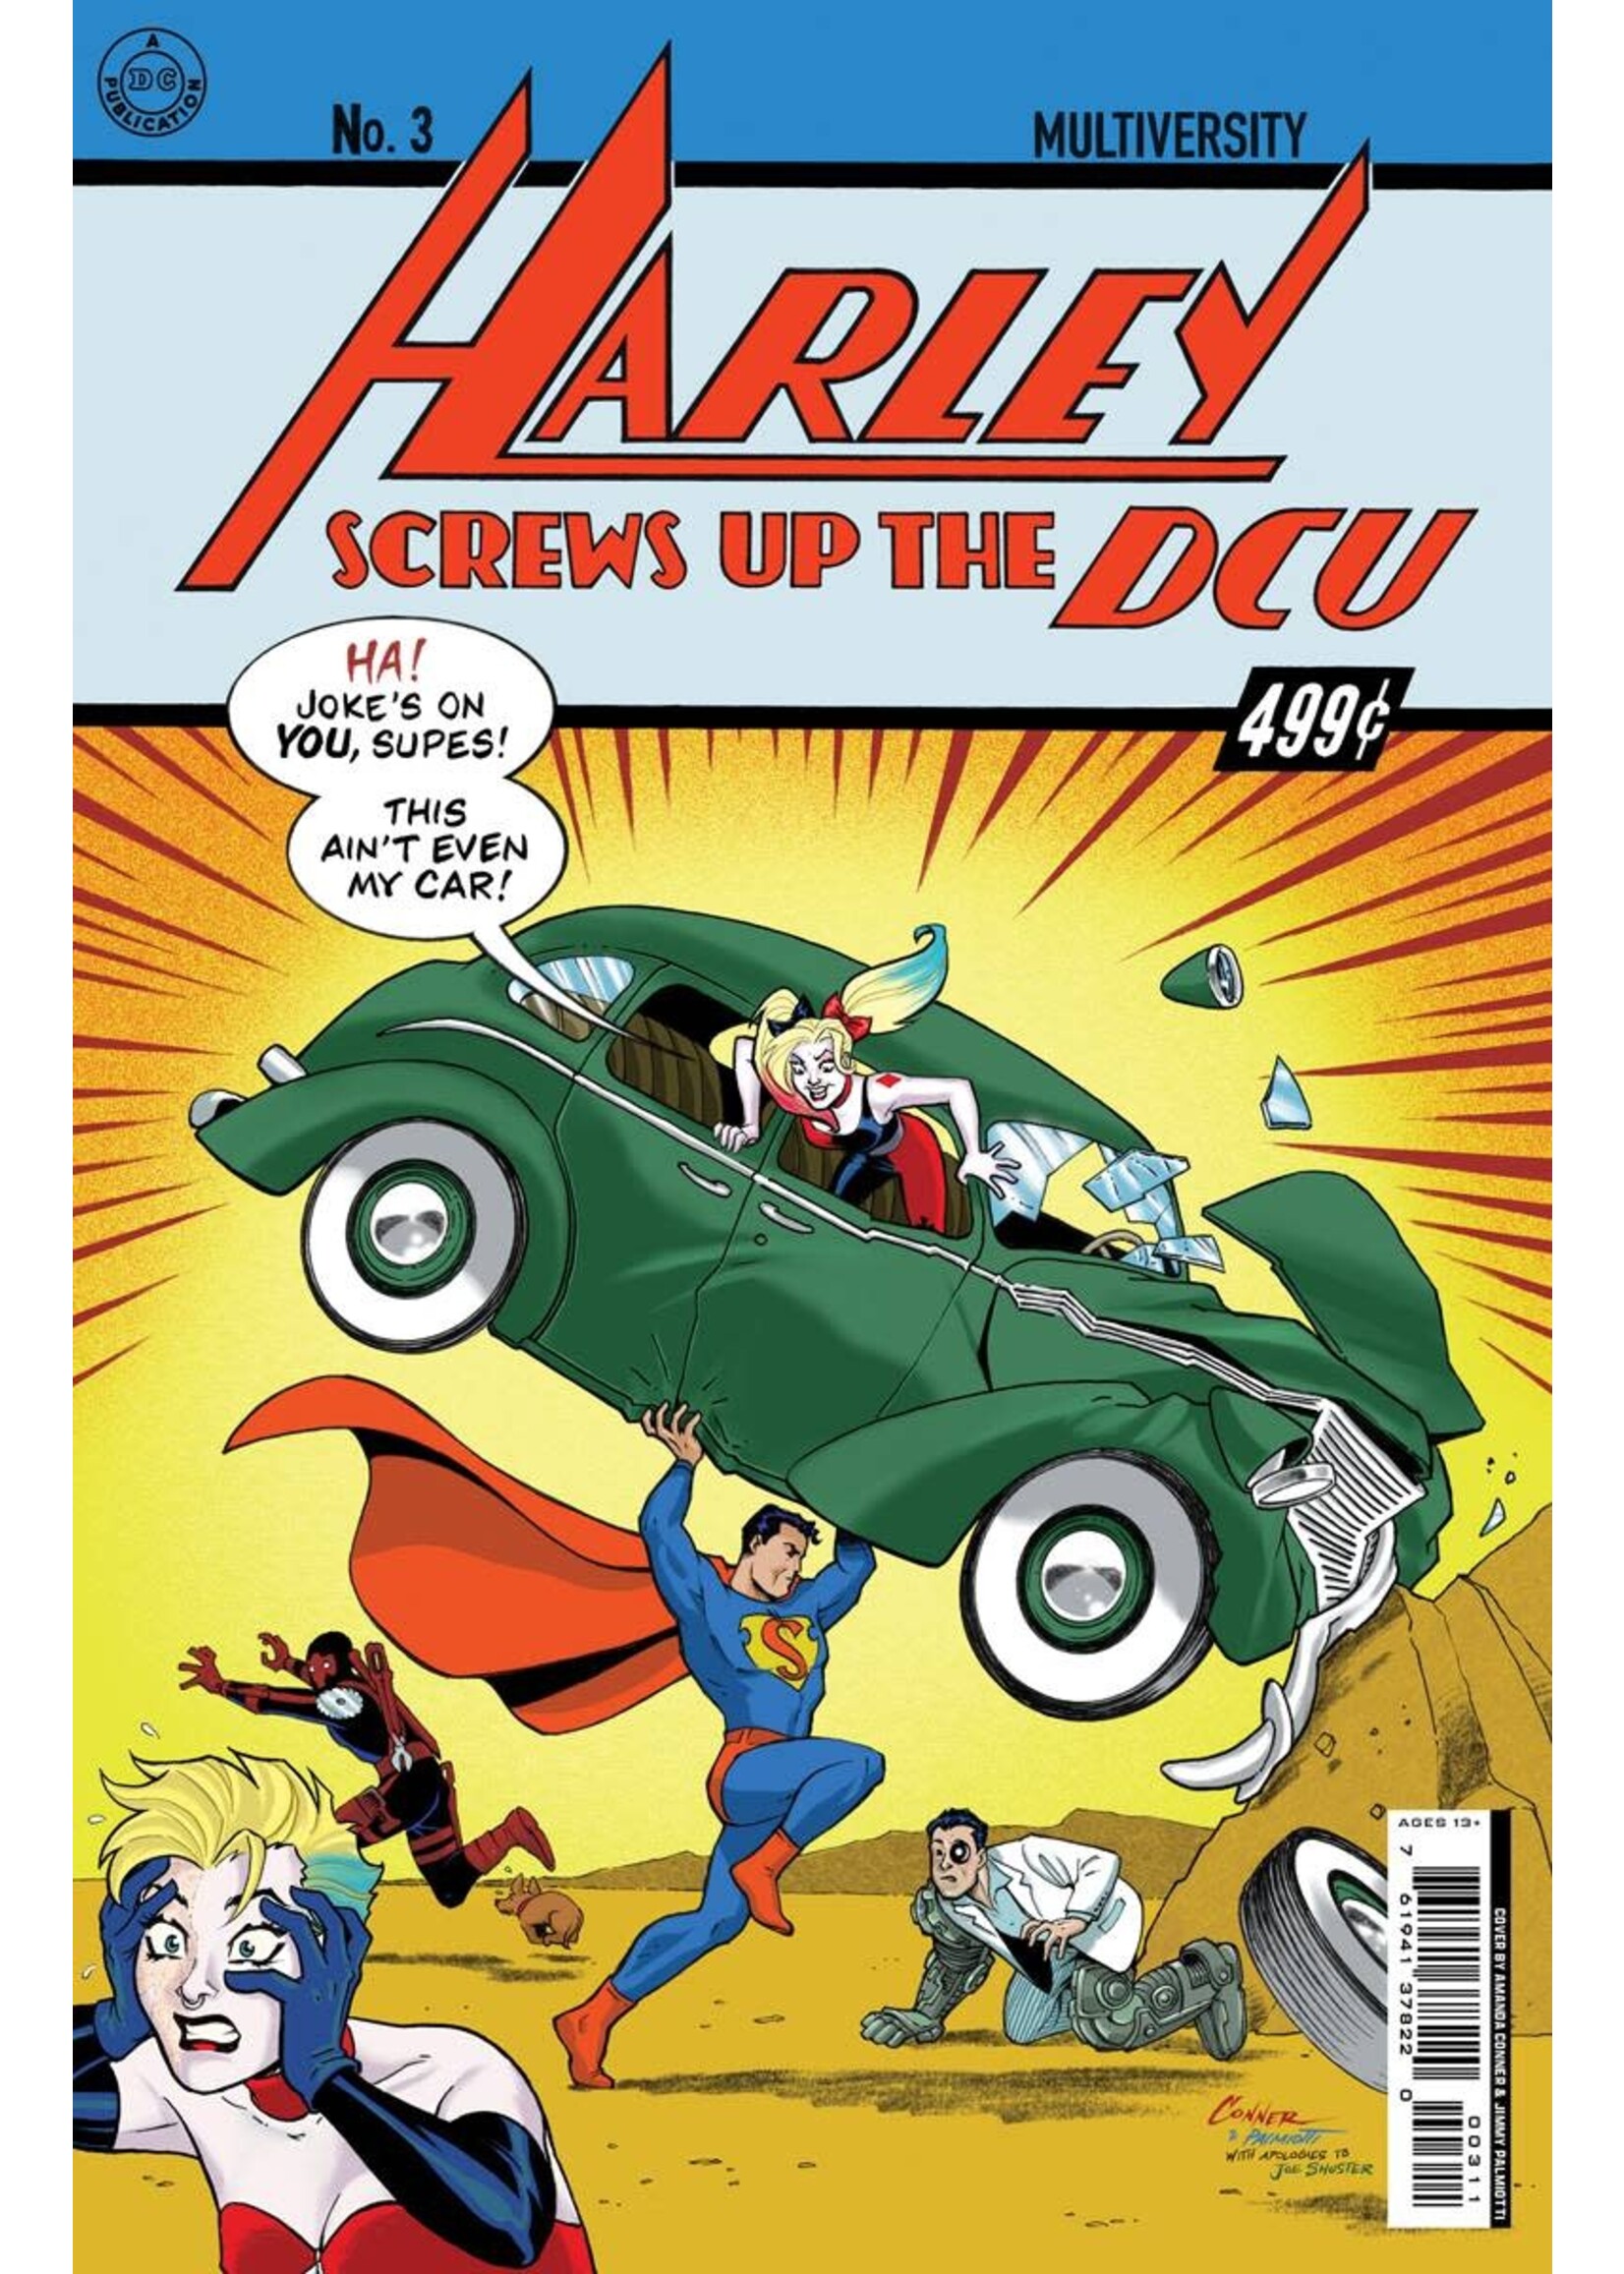 DC COMICS MULTIVERSITY HARLEY SCREWS UP THE DCU #3